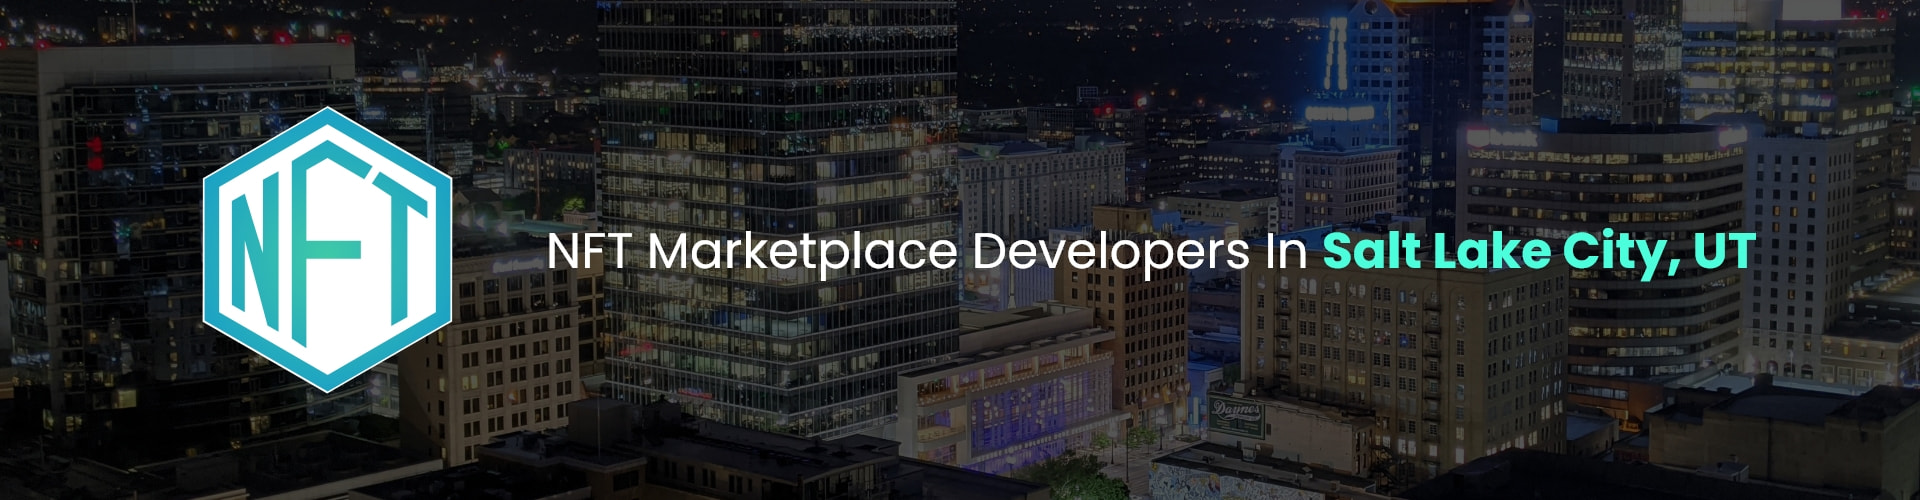 hire nft marketplace developers in salt lake city